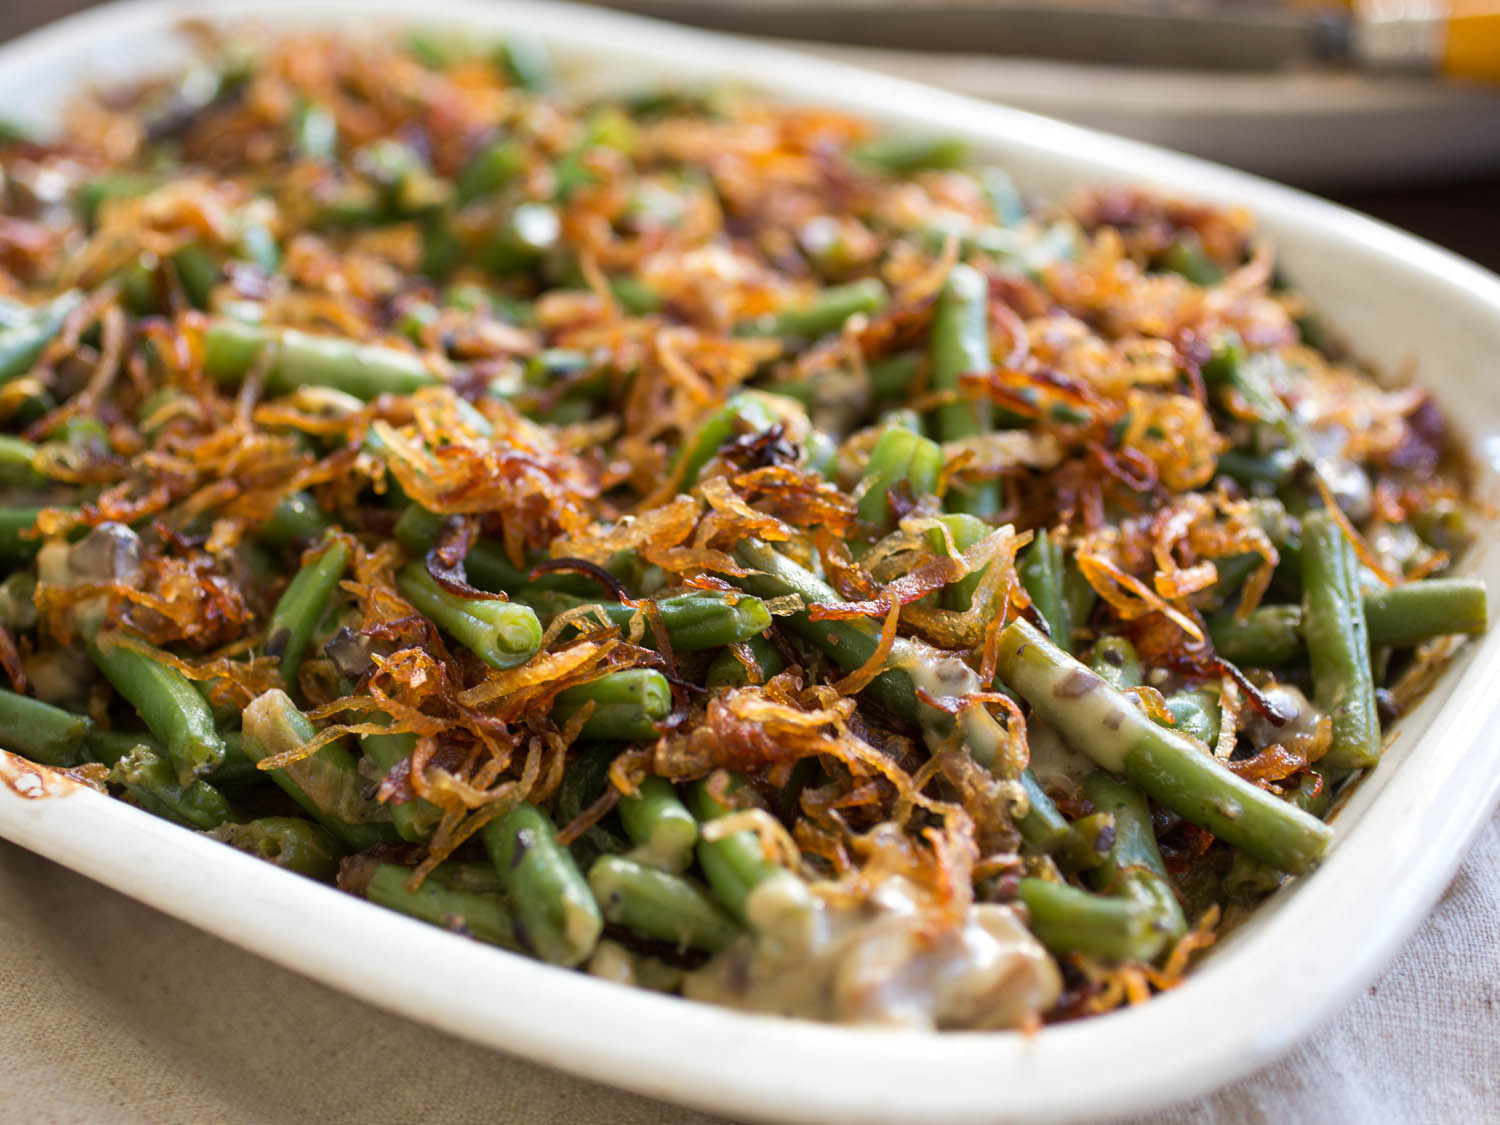 Green Bean Recipes For Thanksgiving
 The Ultimate Homemade Green Bean Casserole Recipe